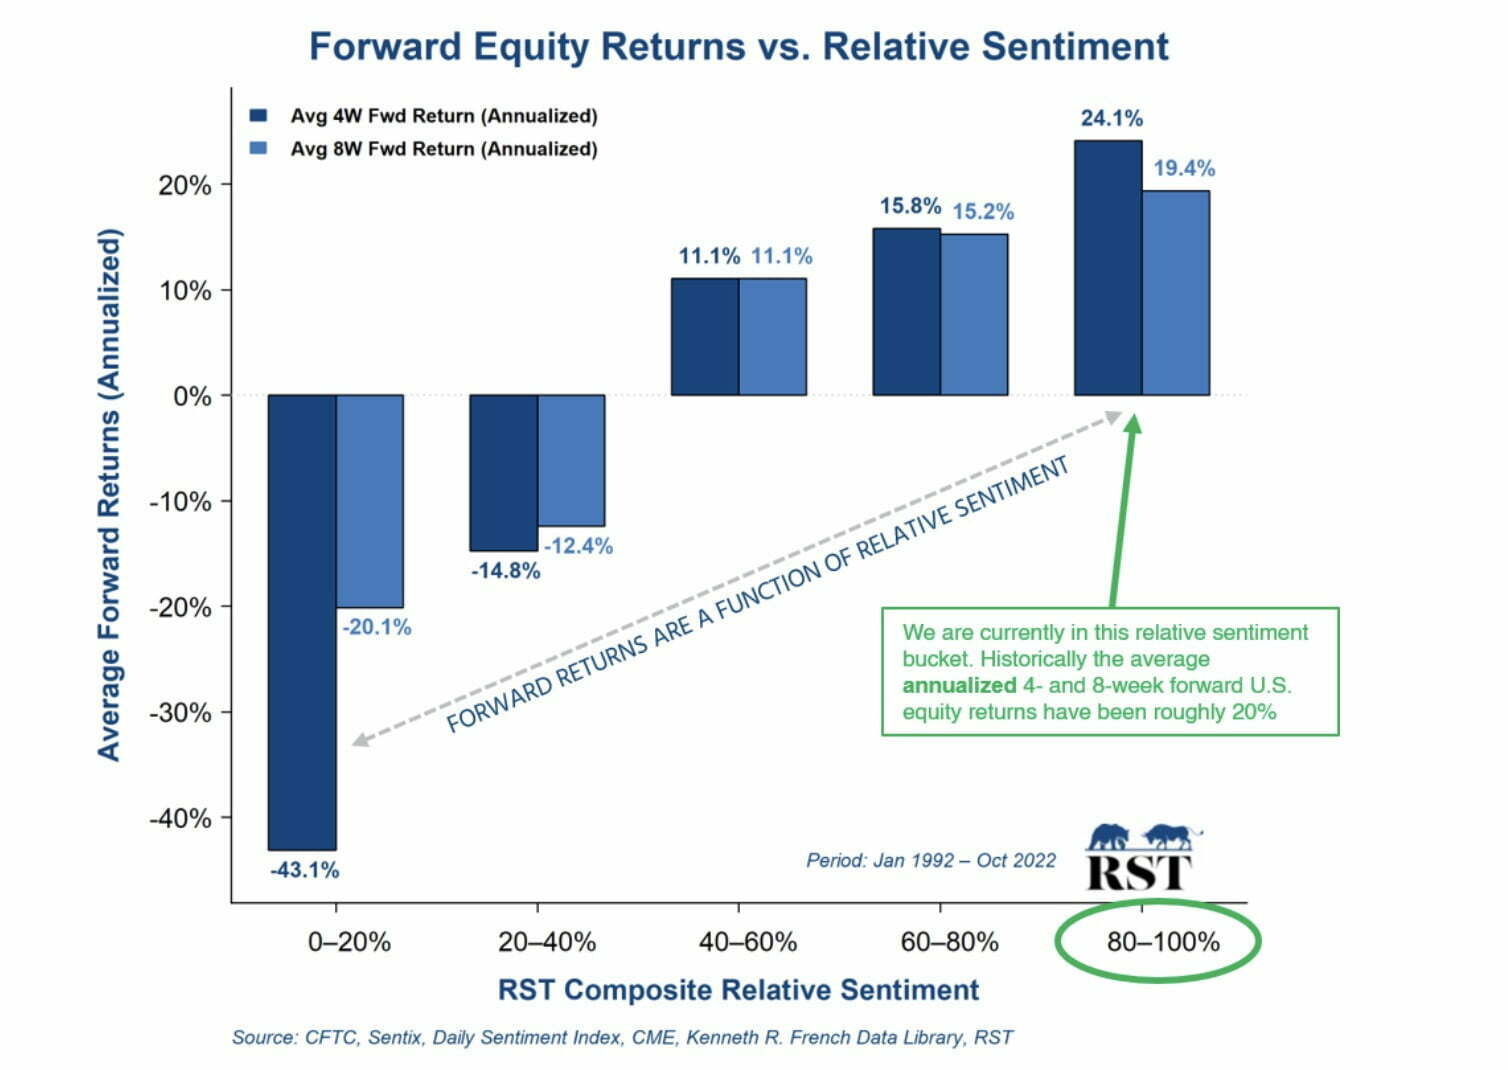 Forward Equity Returns versus Relative Sentiment 